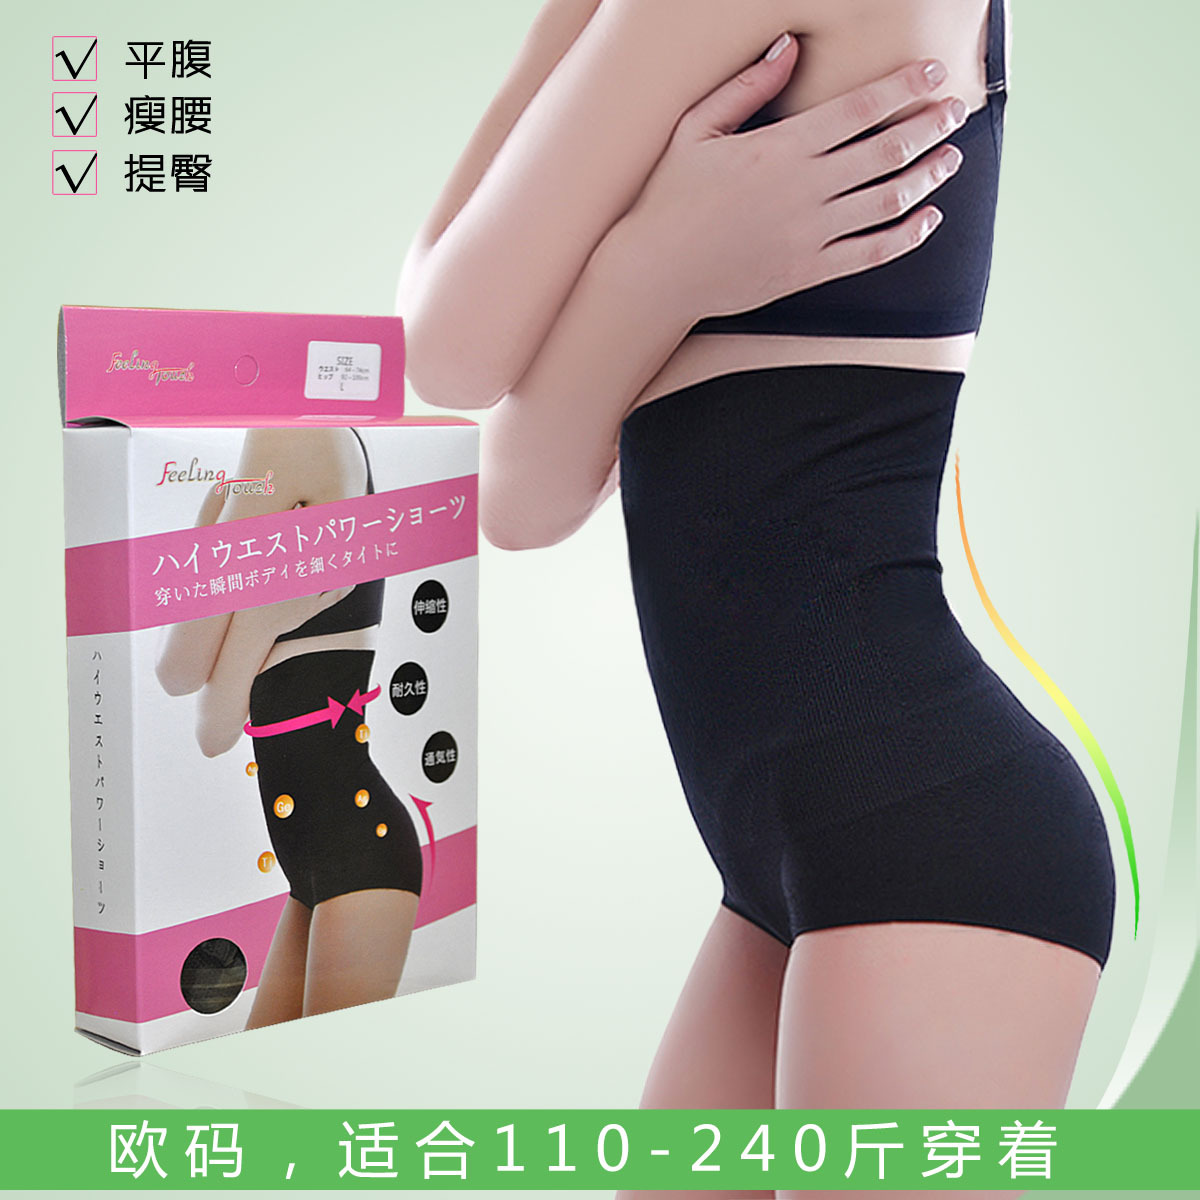 Plus size beauty care body shaping pants body shaping panties ultra high waist abdomen drawing butt-lifting female 110 - 240